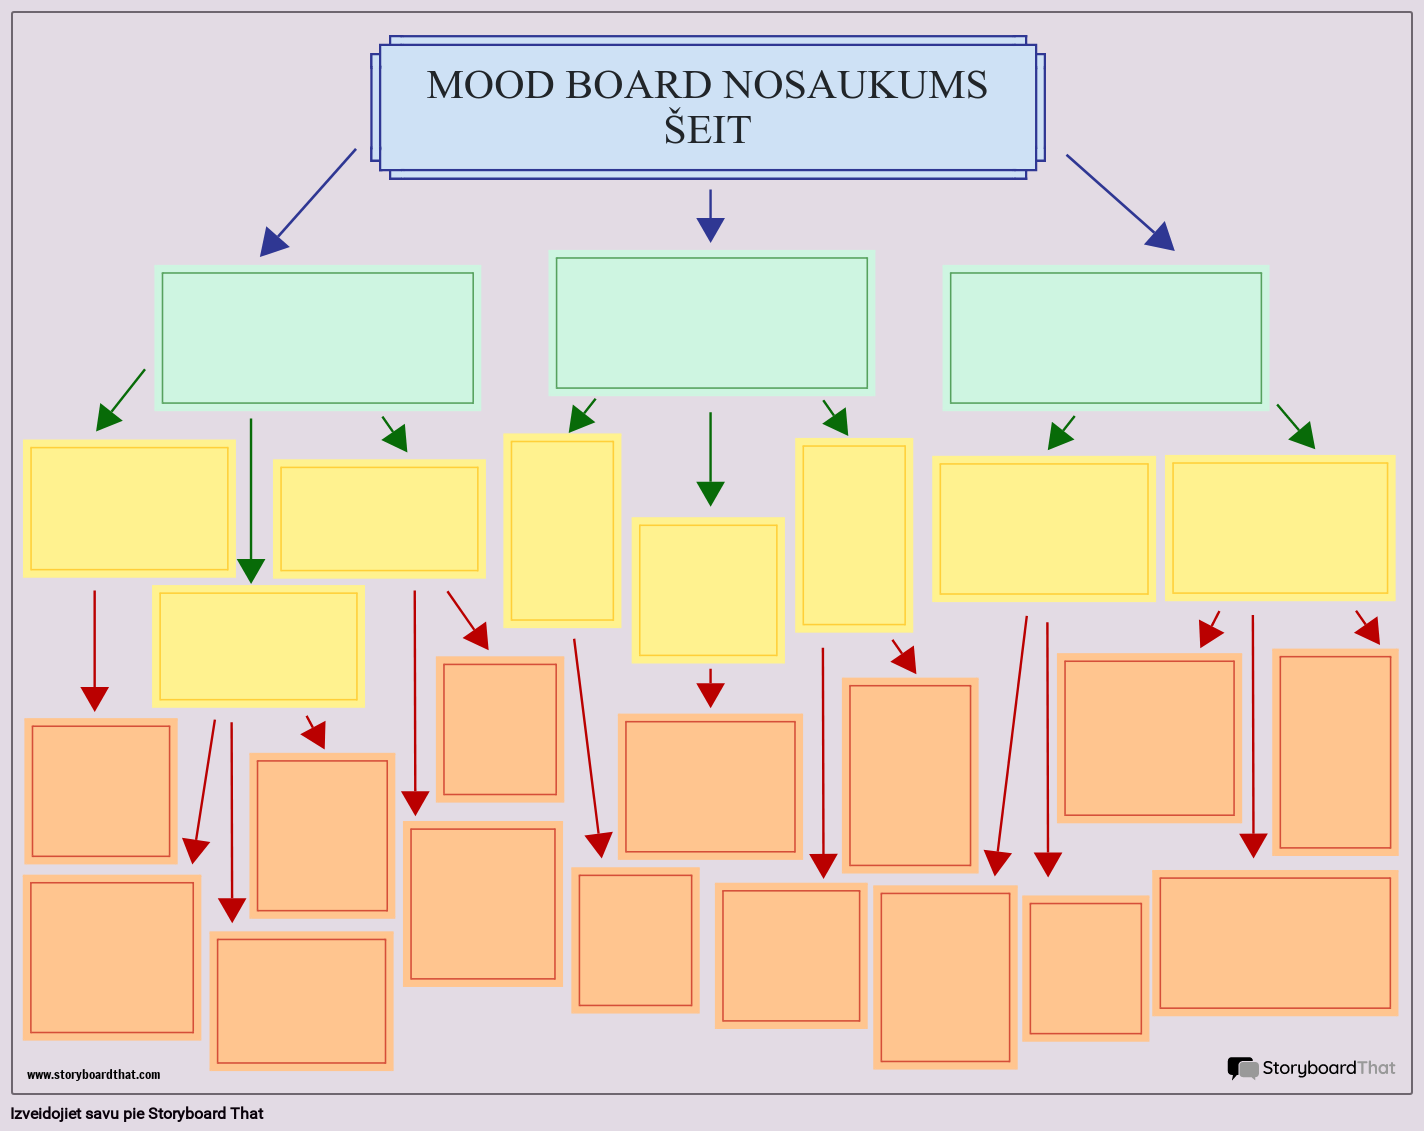 Corporate Mood Board 3. veidne